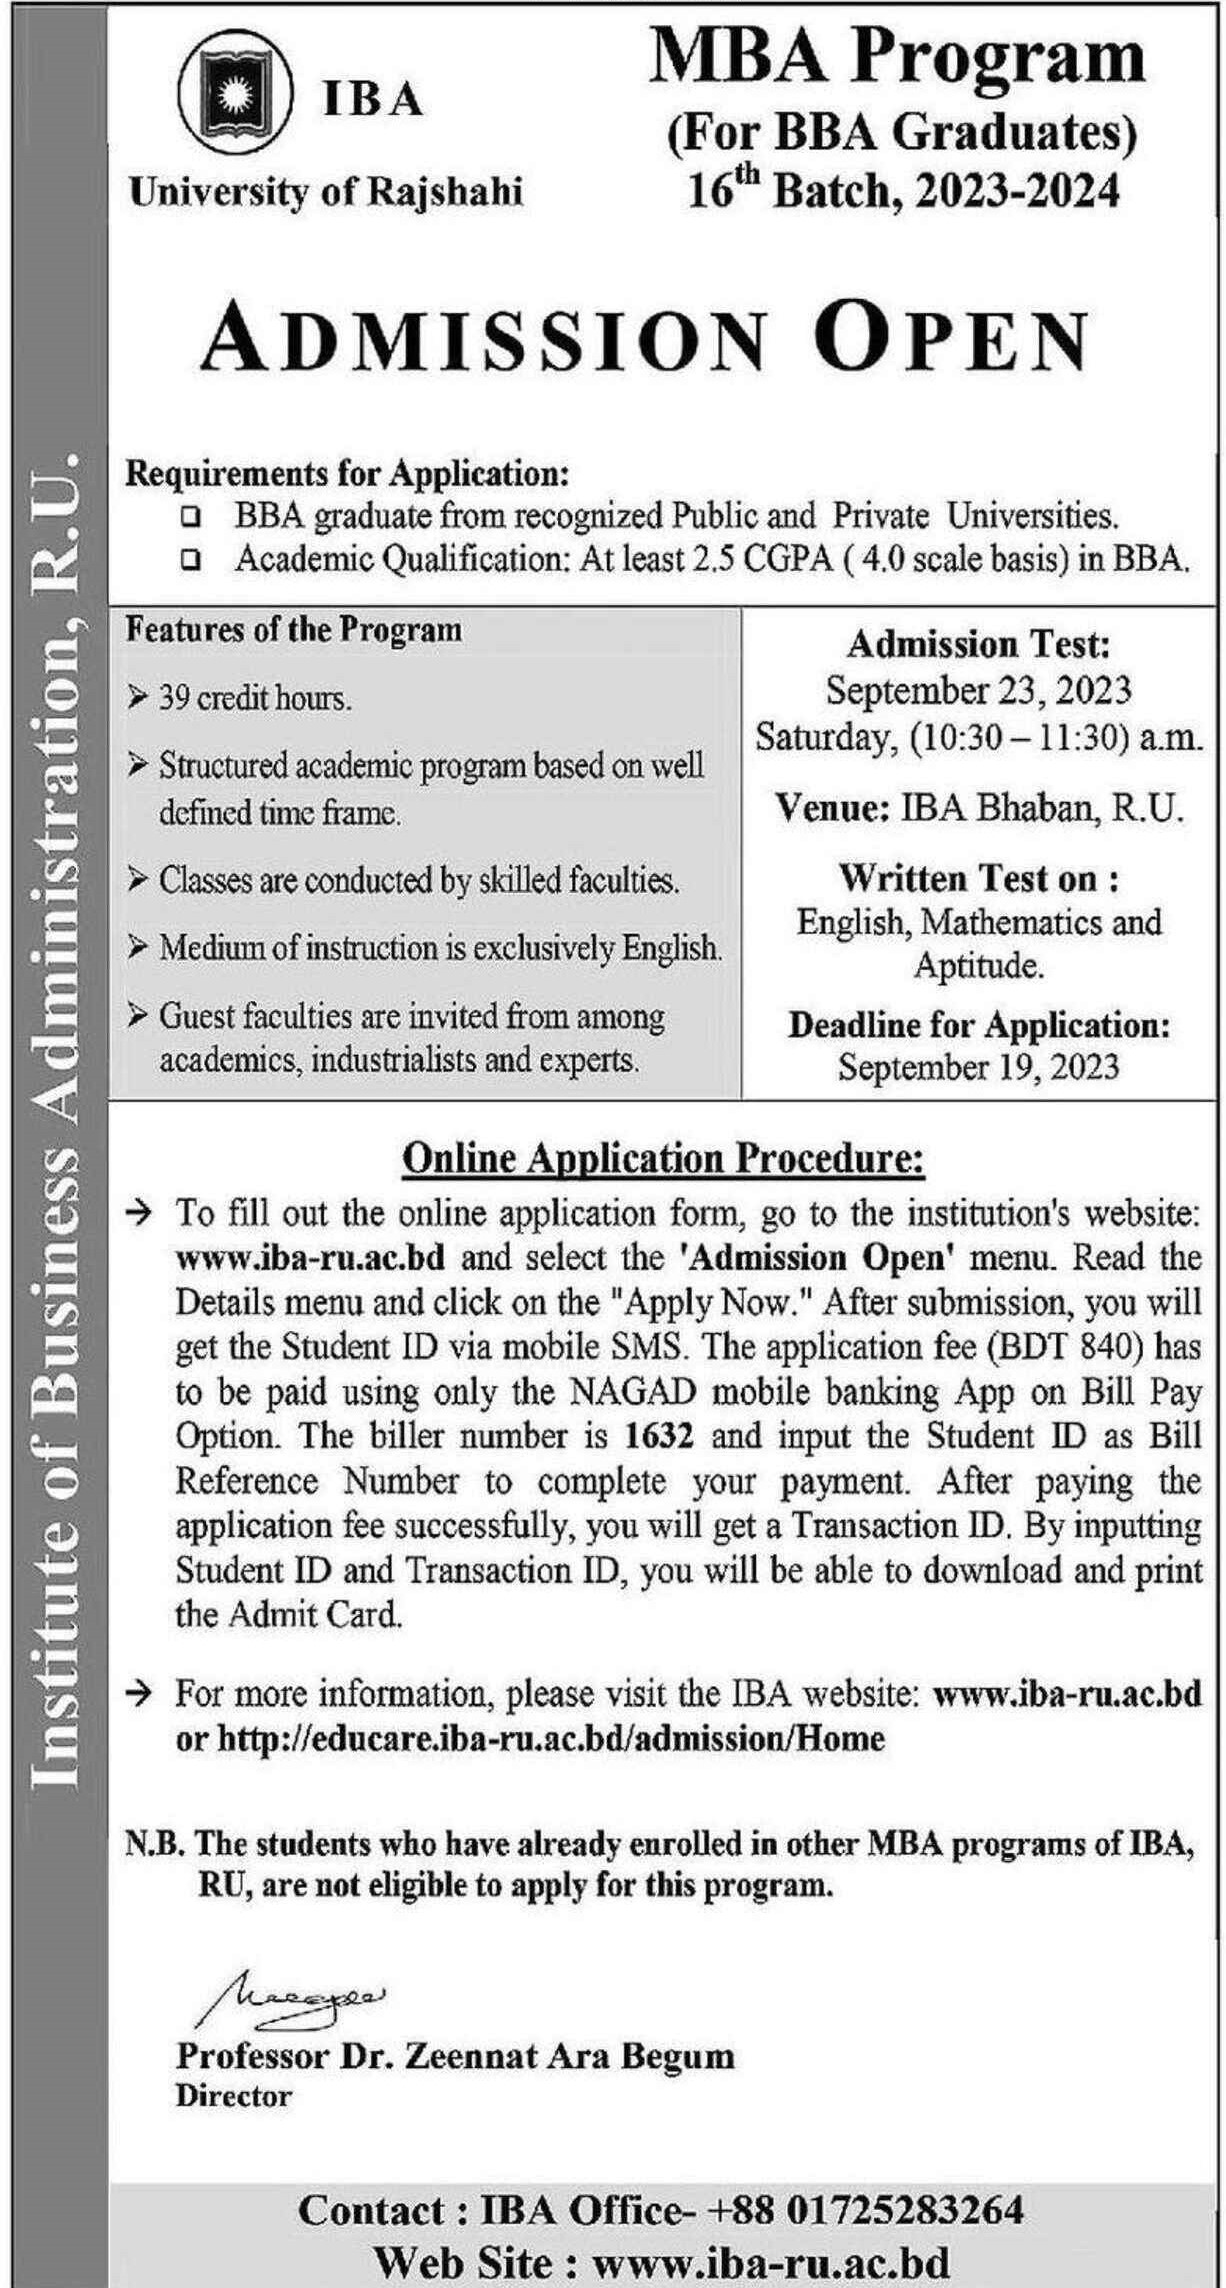 RU Admission in MBA under IBA